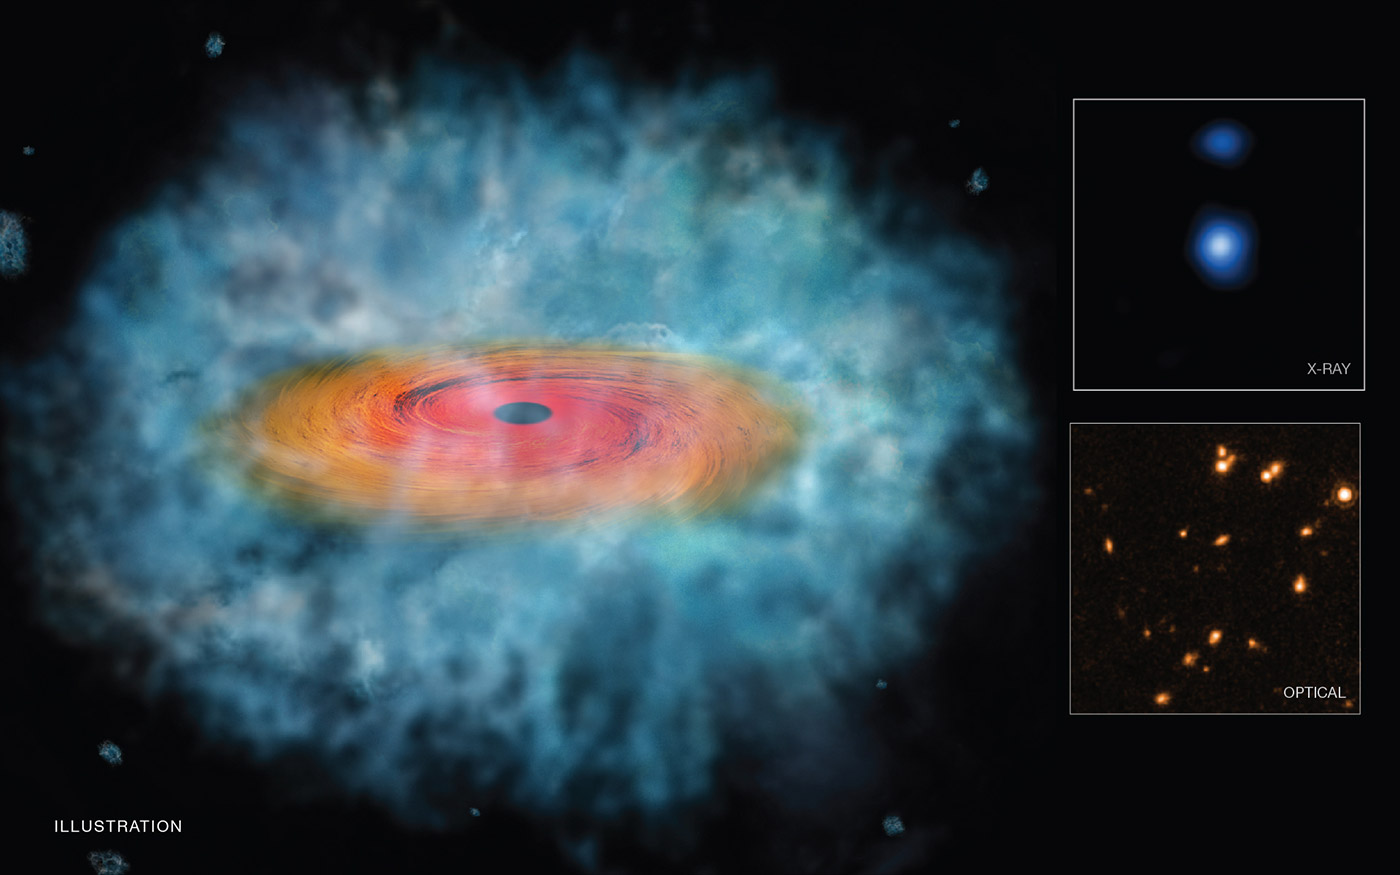 Scientists believe supermassive black holes had speedy births